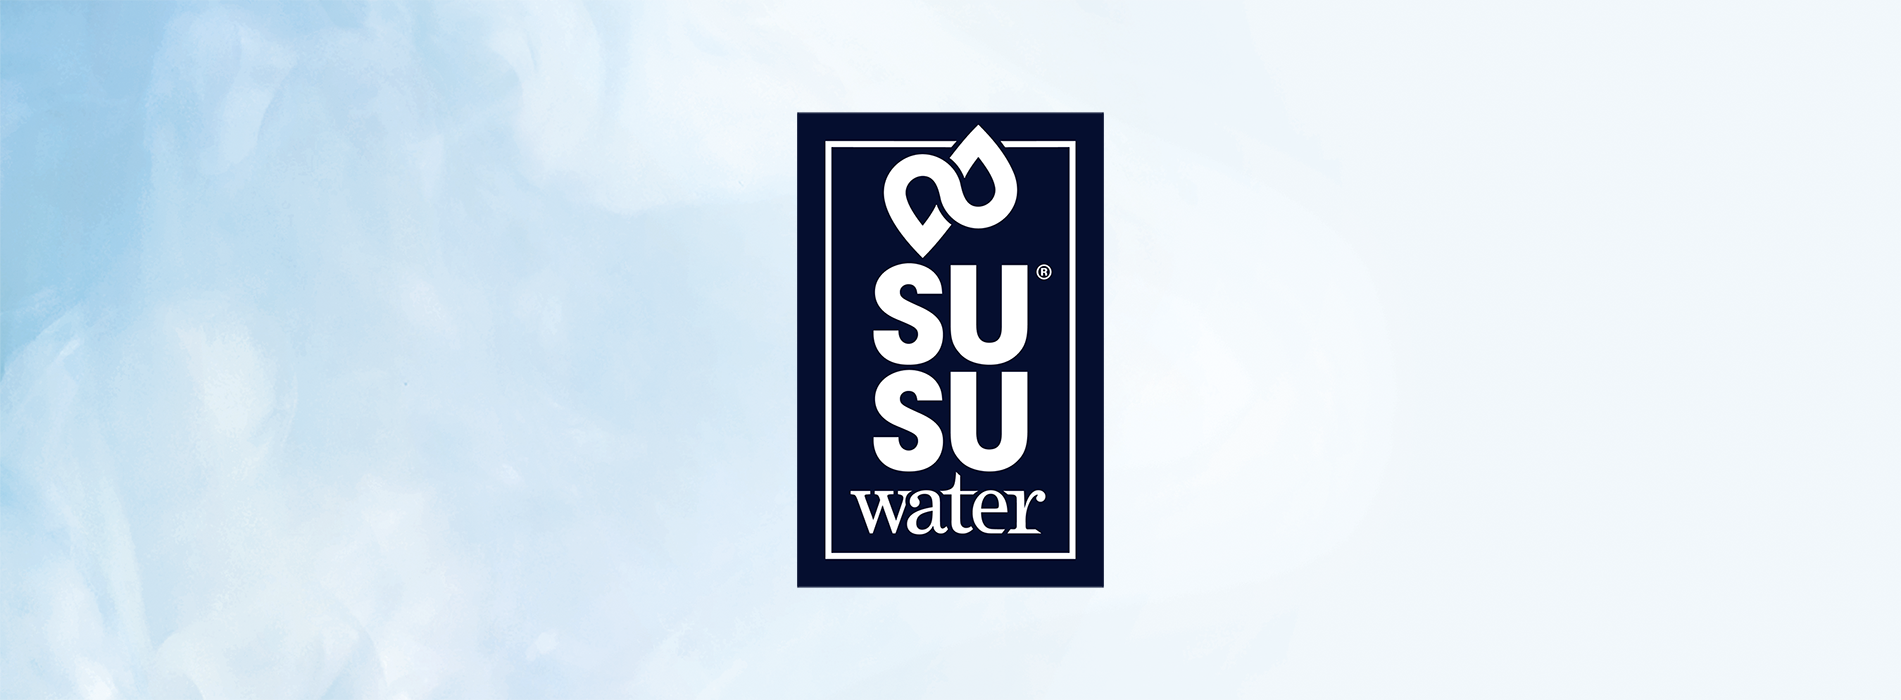 SUSU-Water_Backgronud_Range_With_Logo_1900x700